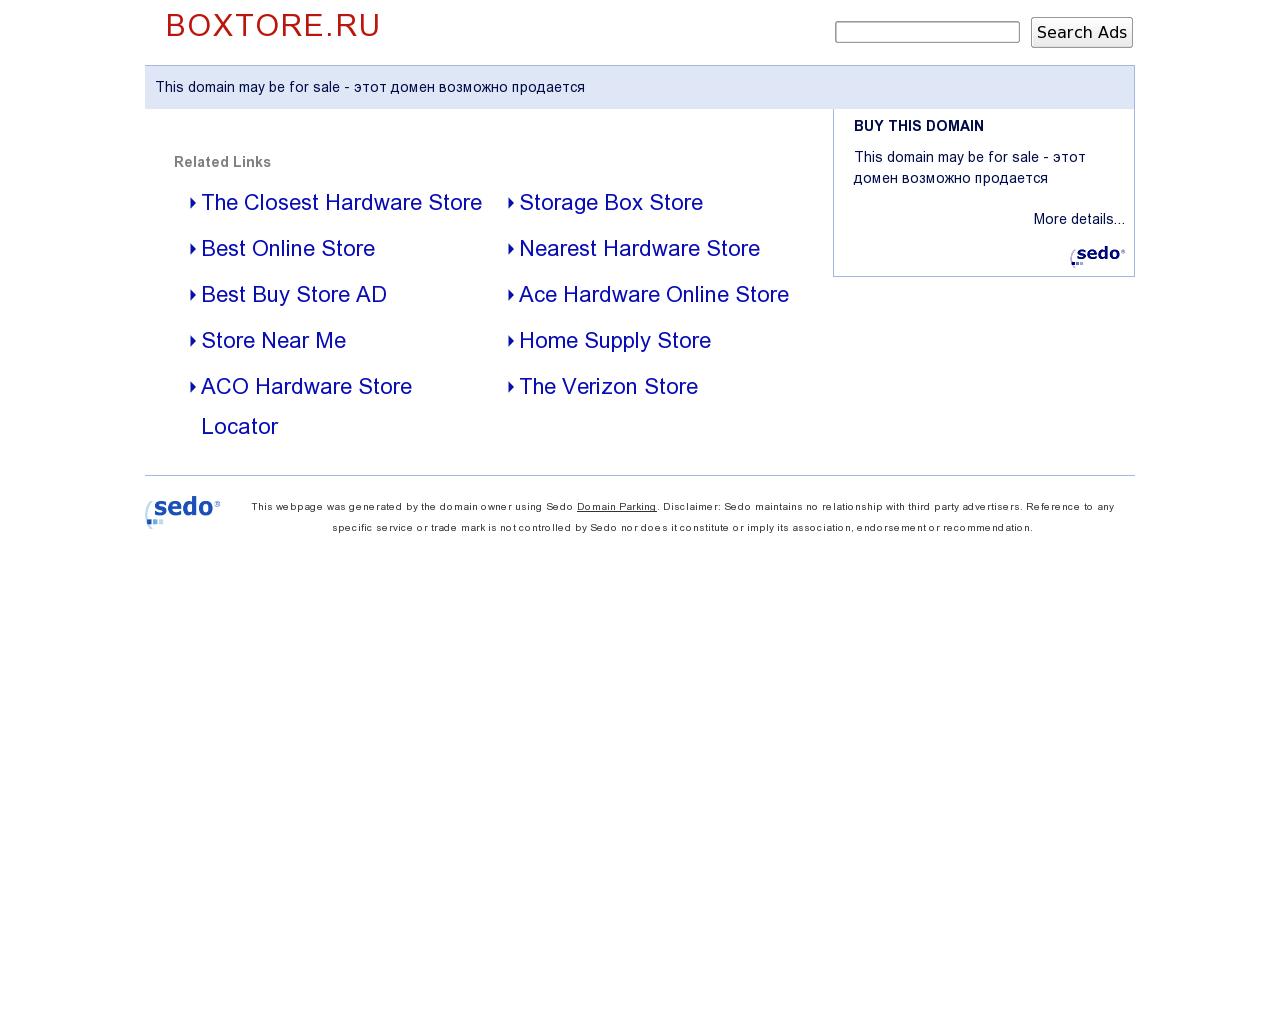 Изображение сайта boxtore.ru в разрешении 1280x1024